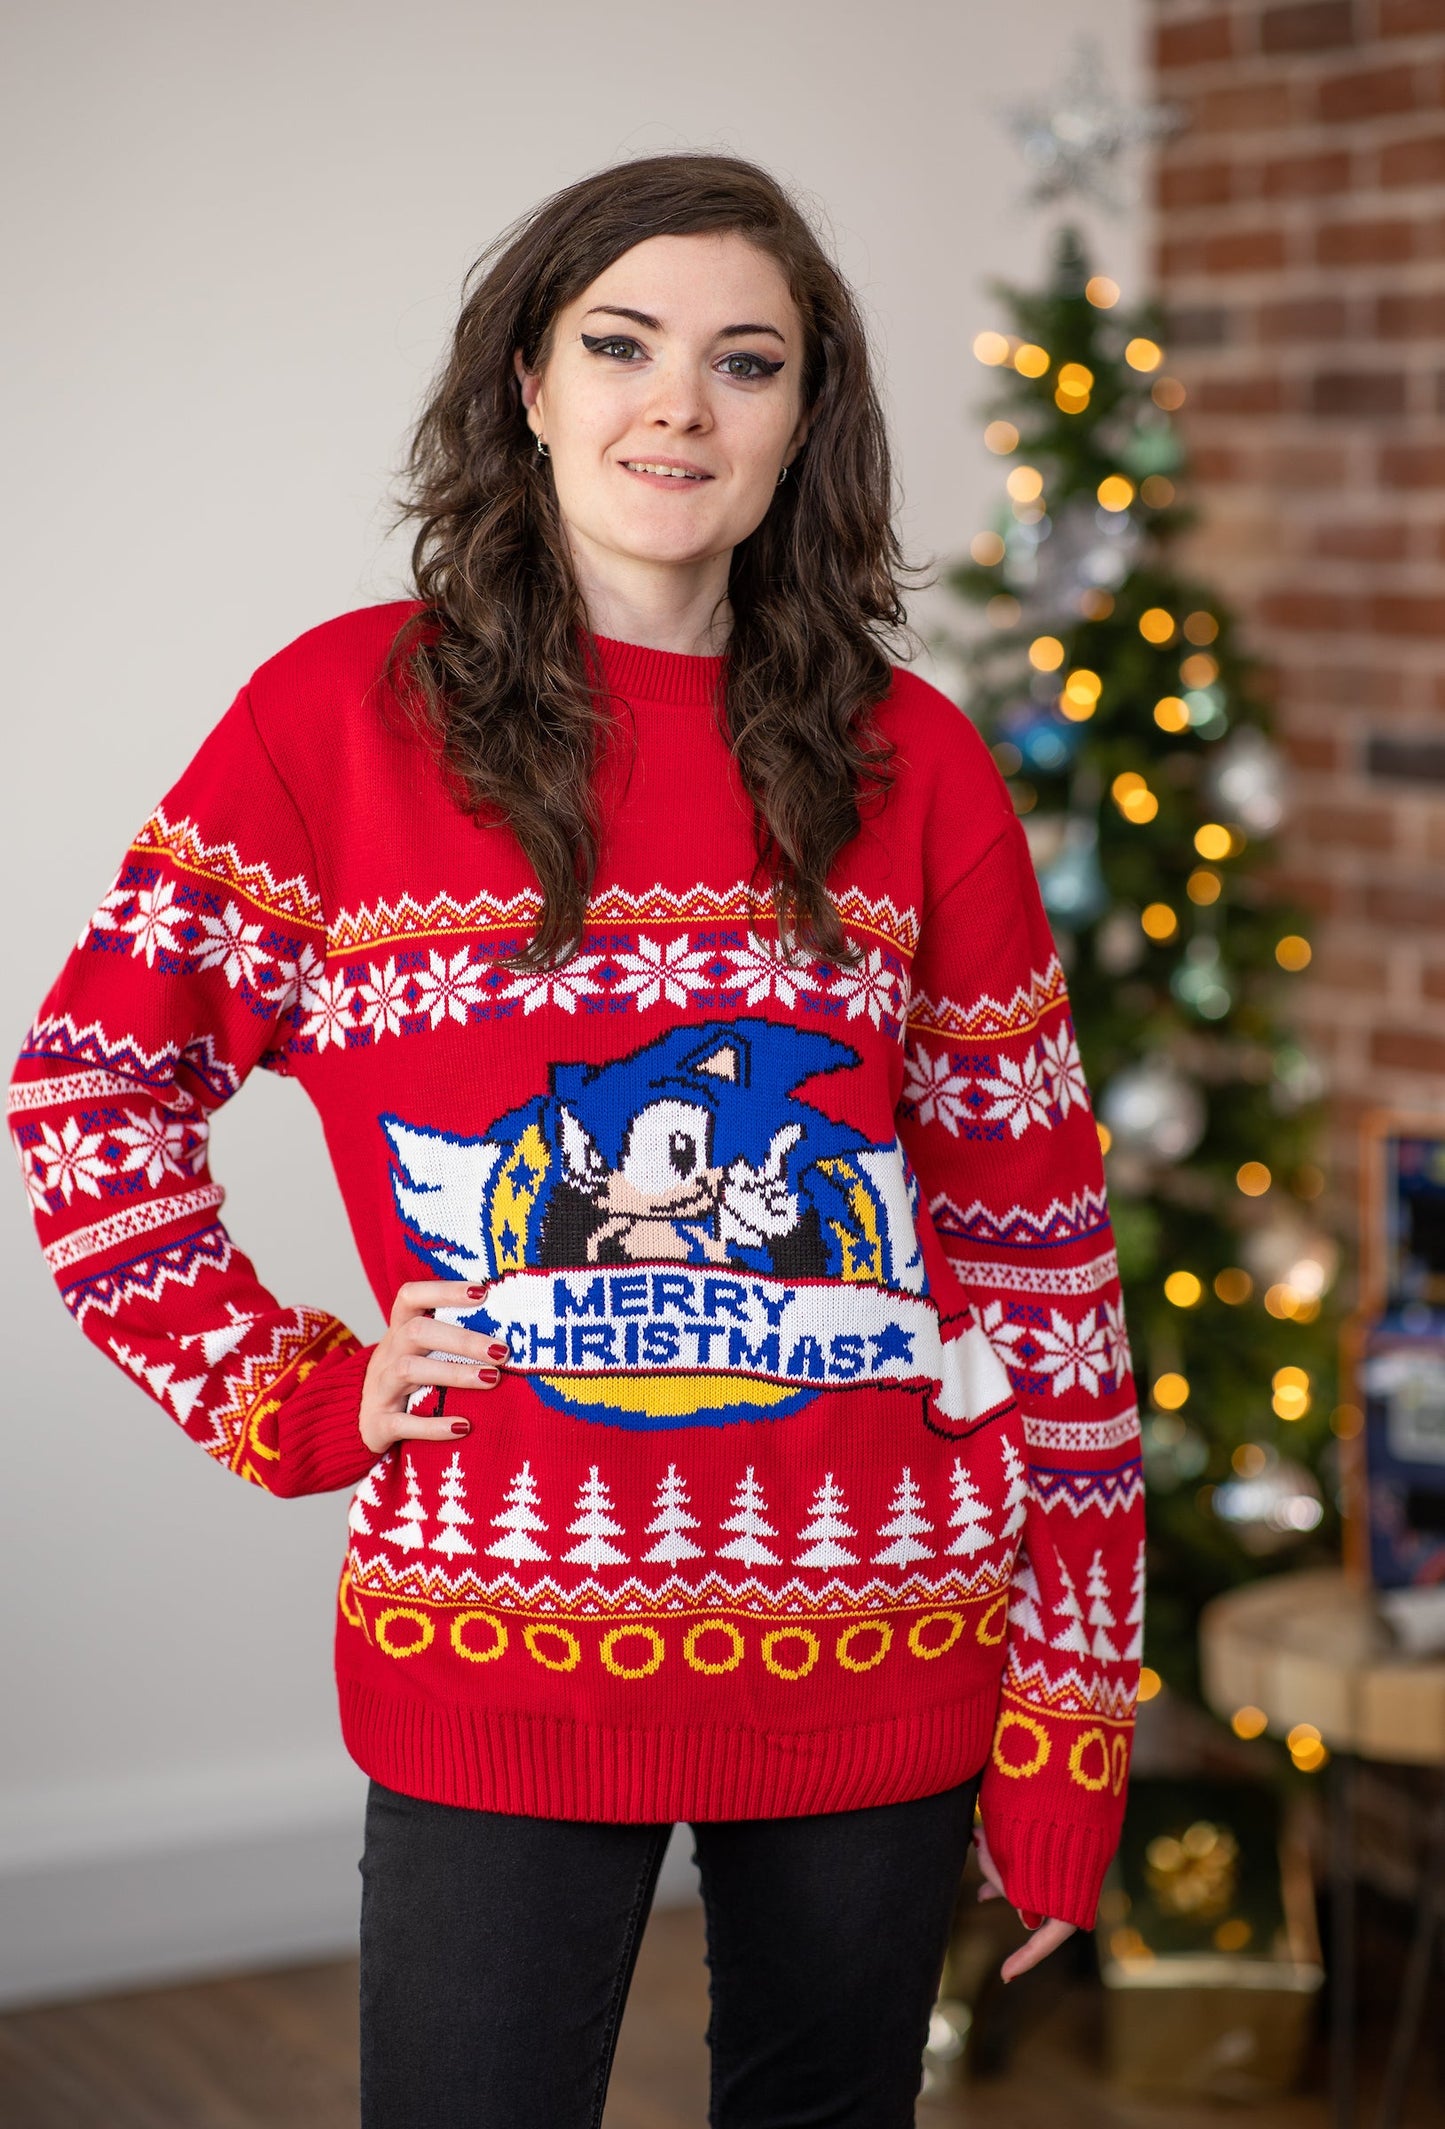 Sonic the Hedgehog Christmas Sweater